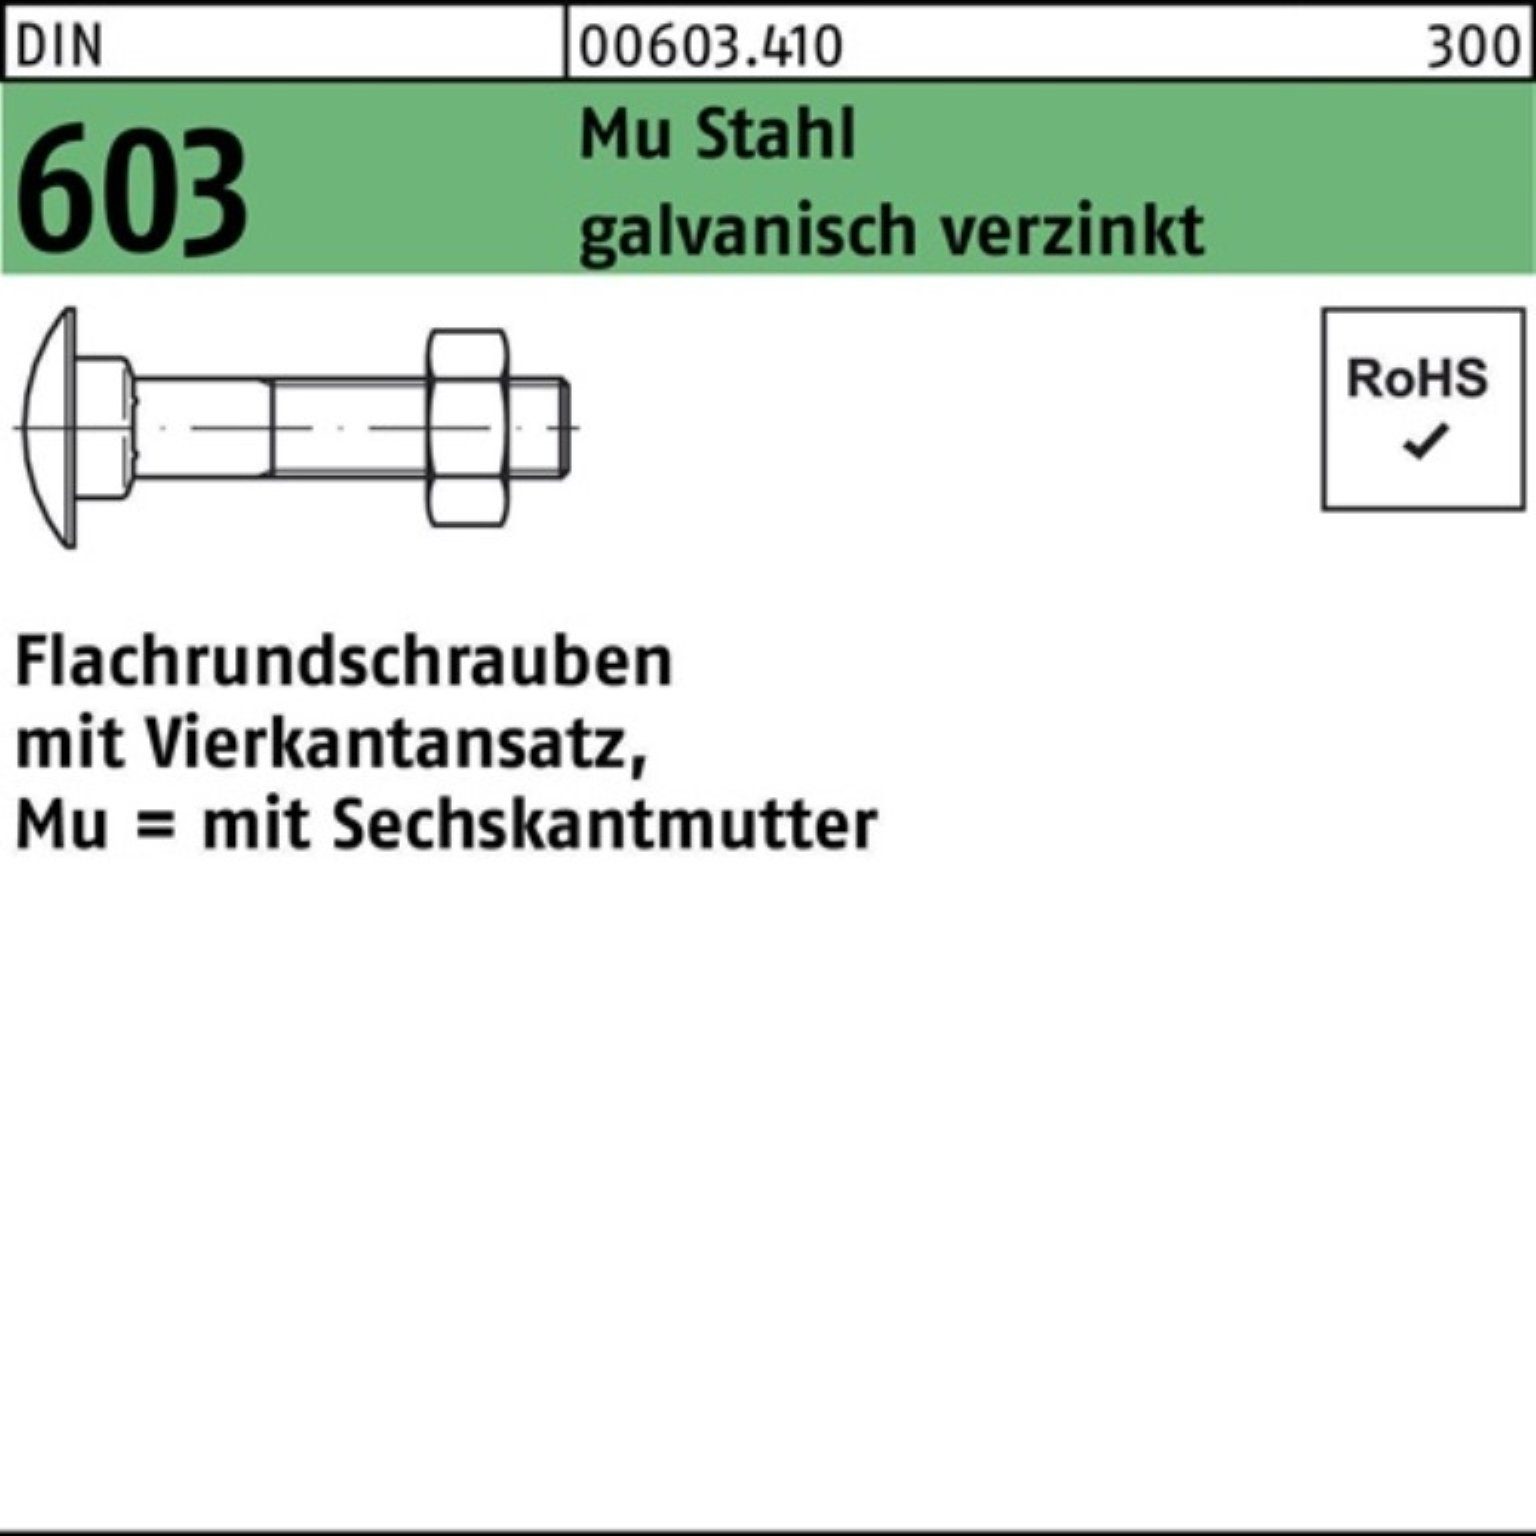 M5x90 DIN 200er Reyher M Schraube Flachrundschraube Pack 603 Vierkantansatz/6-ktmutter